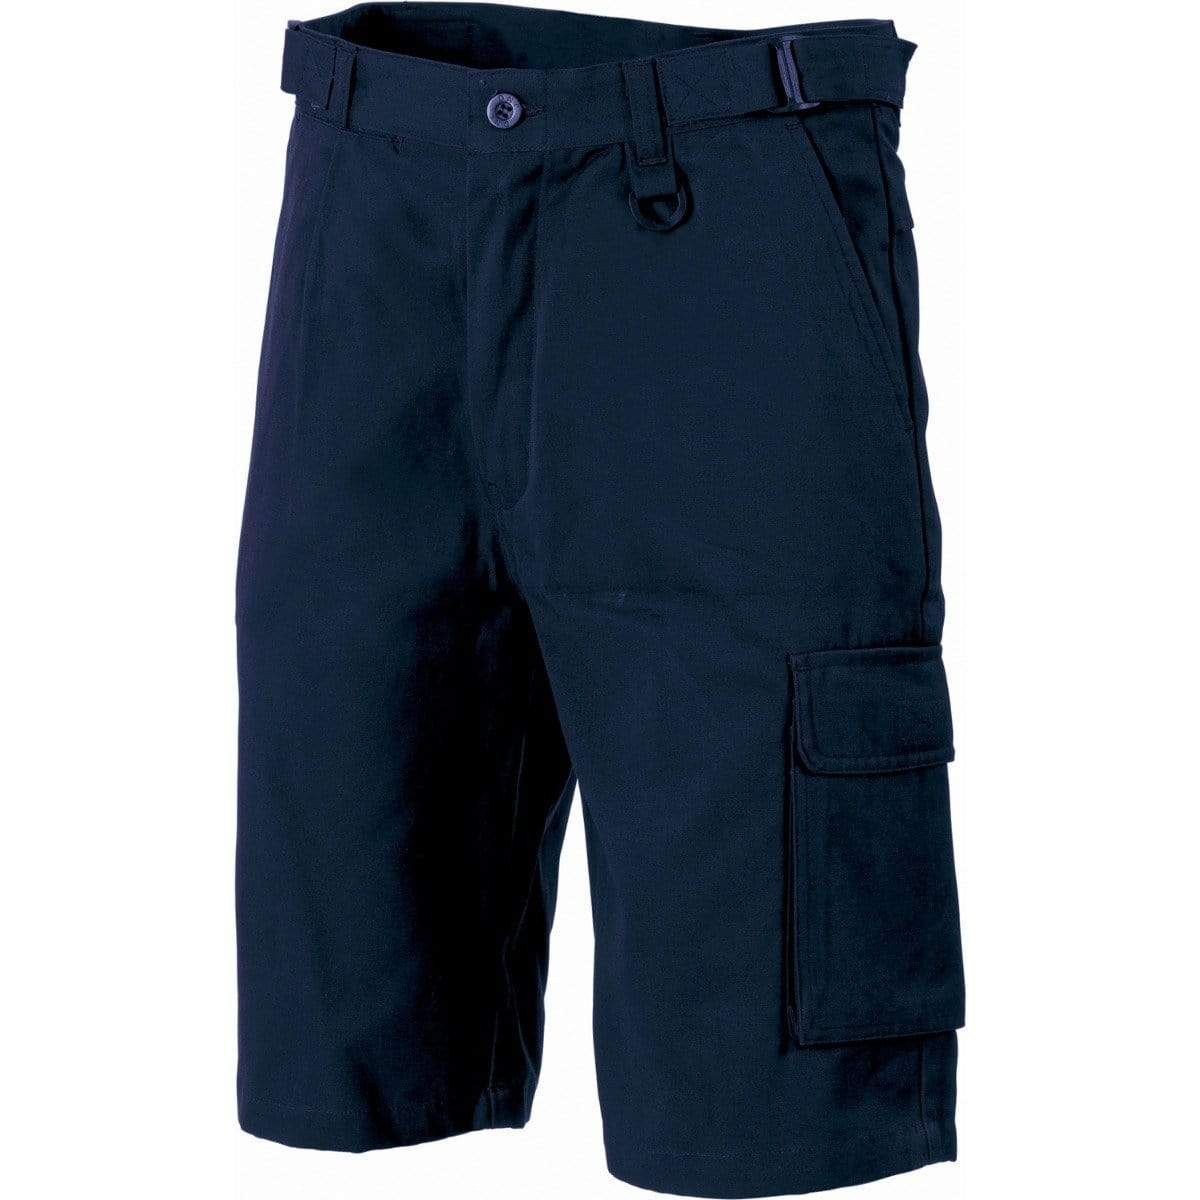 Dnc Workwear Hero Air Flow Duck Weave Cargo Shorts - 3331 Work Wear DNC Workwear Navy 72R 